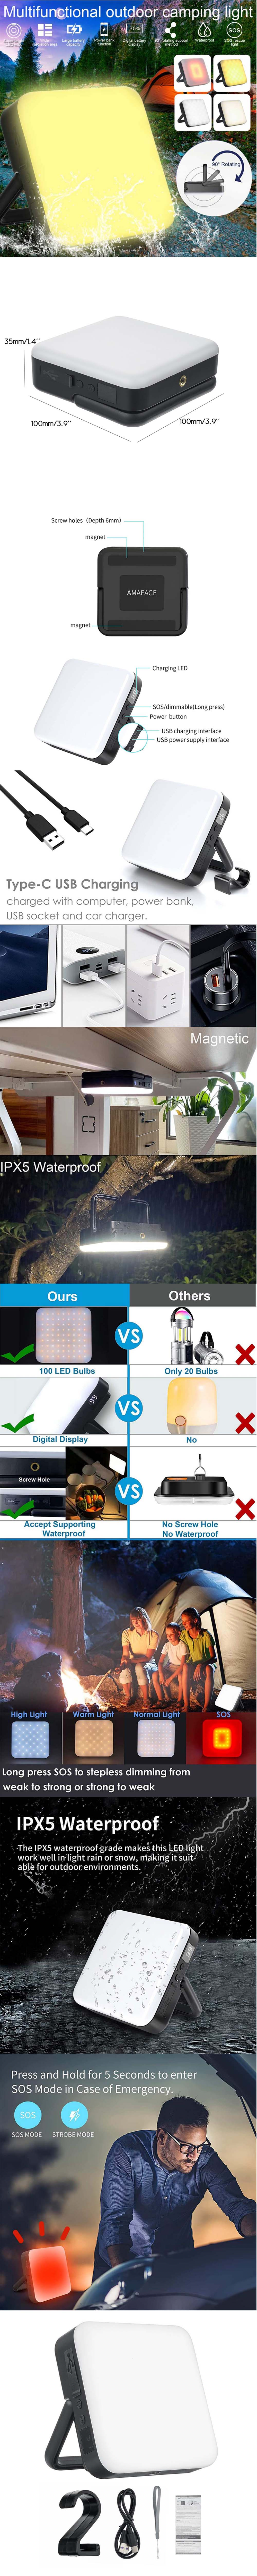 Portable-LED-Camping-Light-13500mAh-High-Capacity-Outdoor-USB-Charging-Waterproof-Powerbank-Multifun-1933481-1